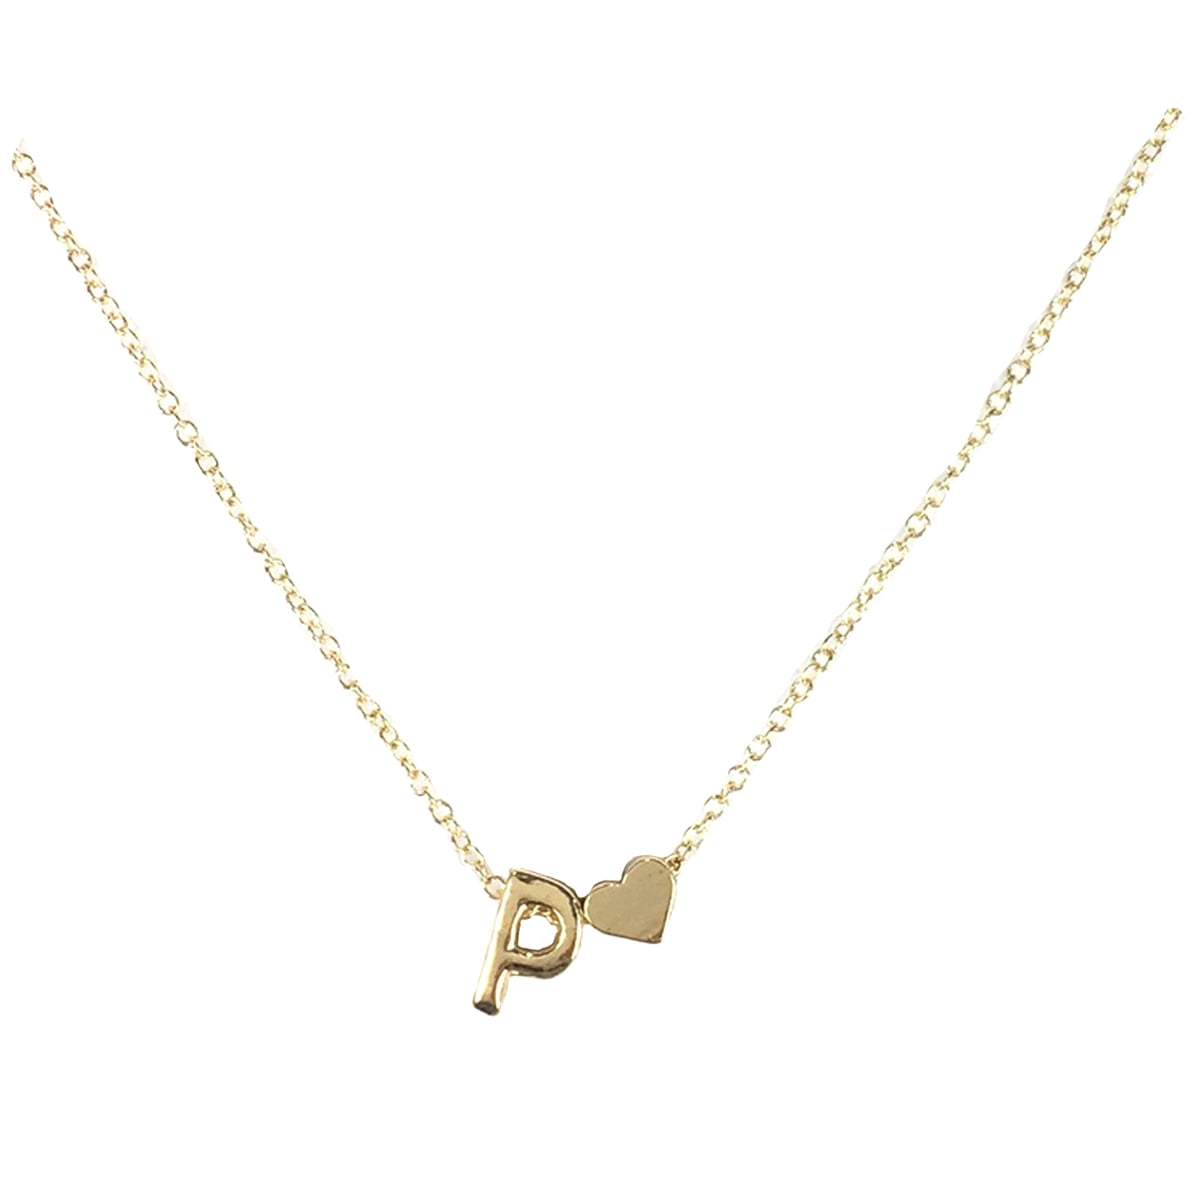 Details about   1pc Little Gold pl GUN locket charm necklace opens pendant crystal heart bullet 